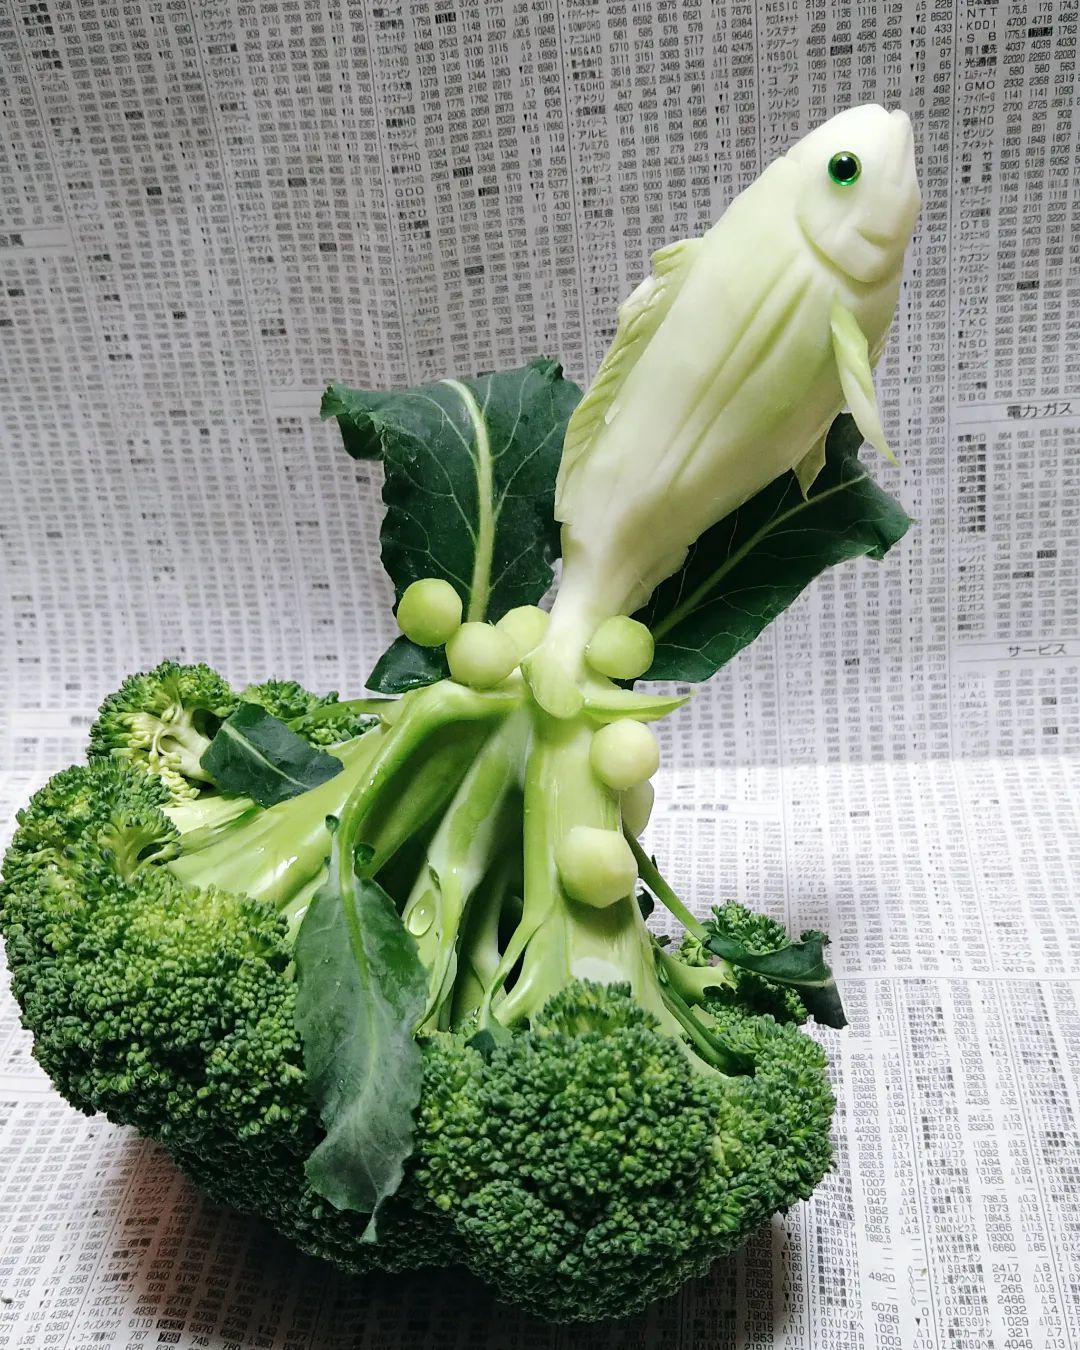 Escultor japons transforma frutas e legumes  em esculturas comestveis brilhantes 02